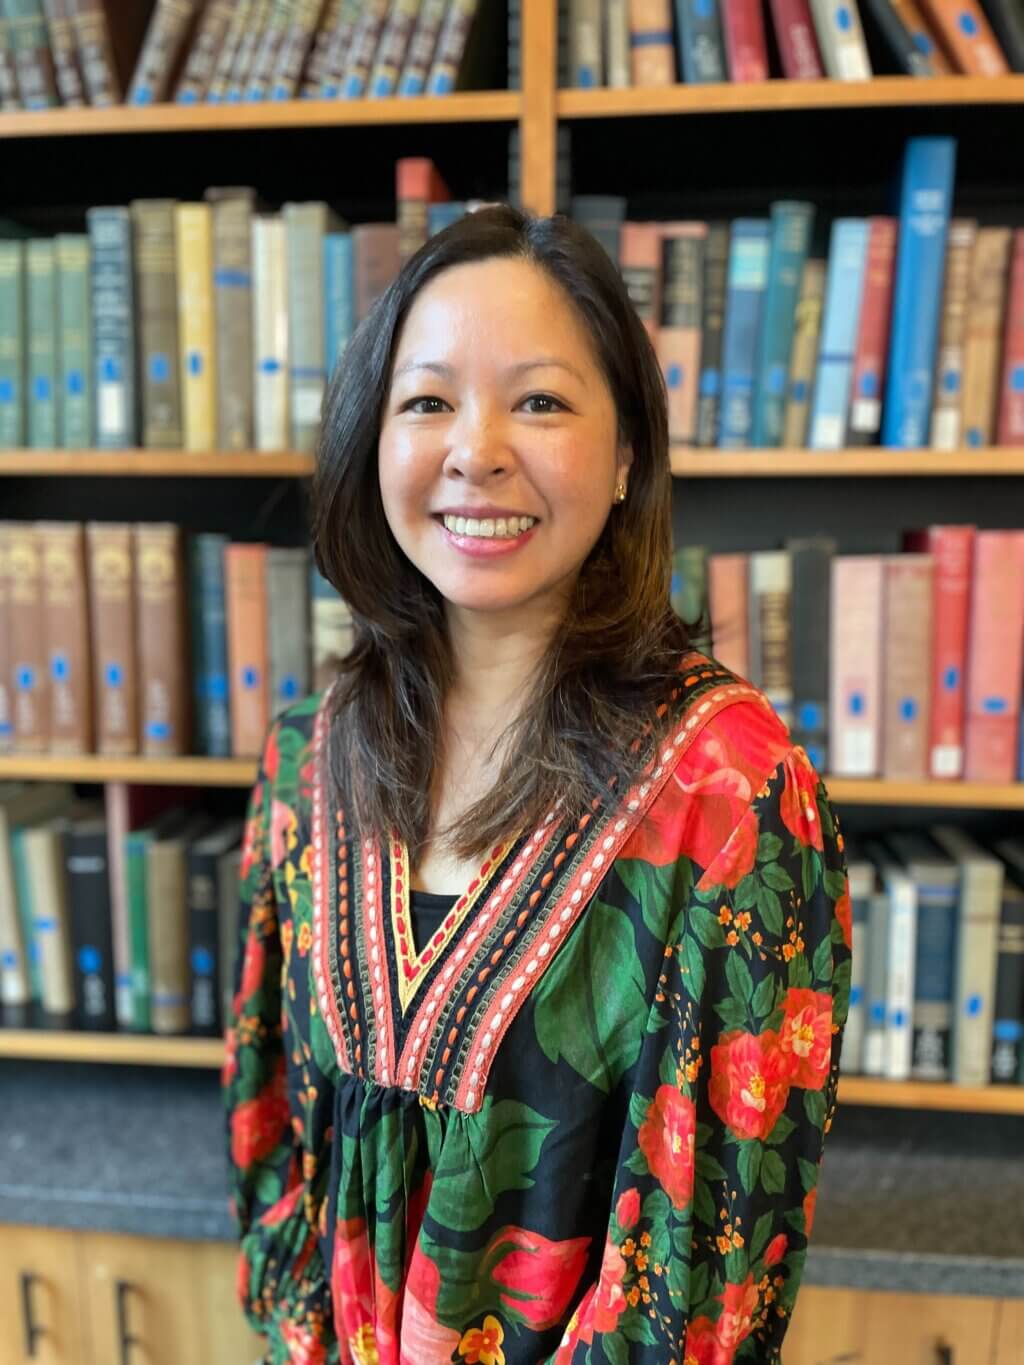 Lisa Nguyen standing in front of a bookshelf